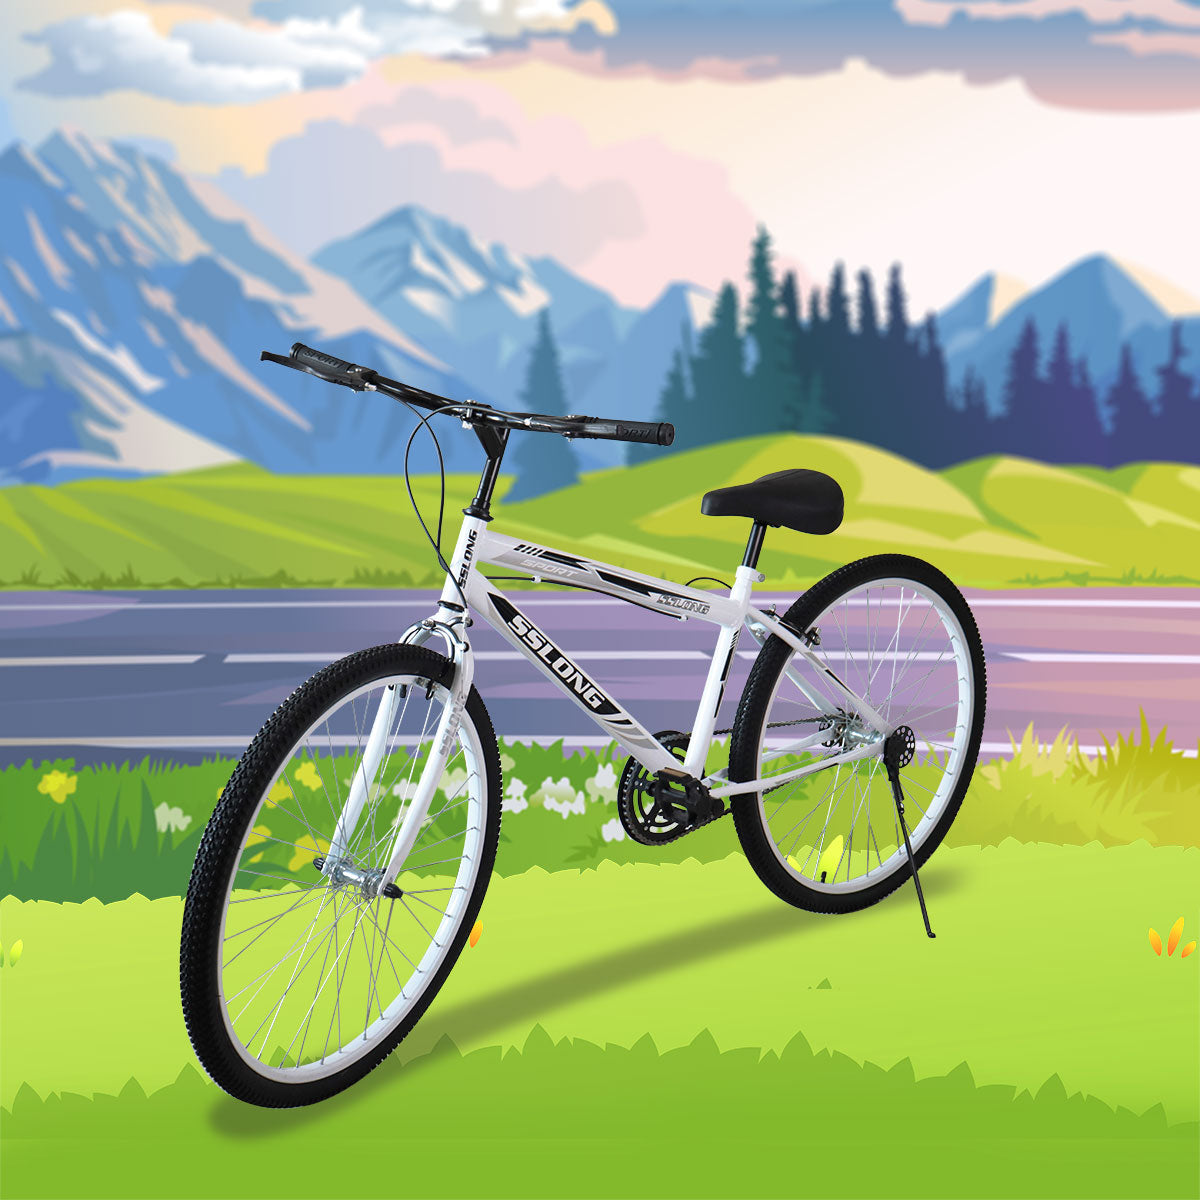 Bicicleta infantil 24 pulgadas Bike Sport Viky – Bicicleta para